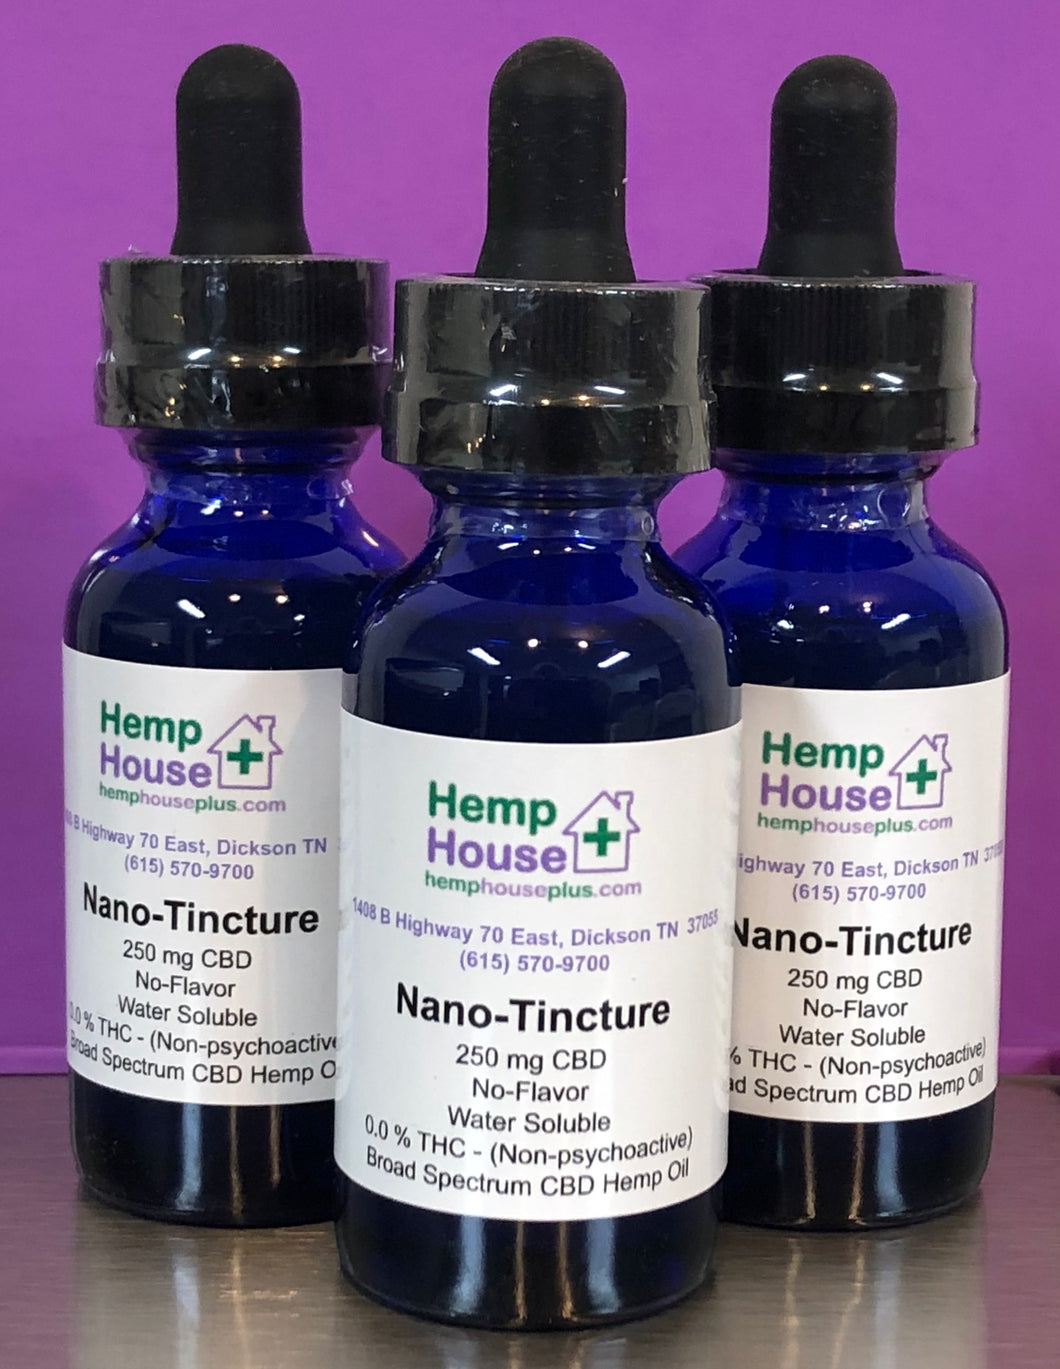 Nano-Tincture 250 mg